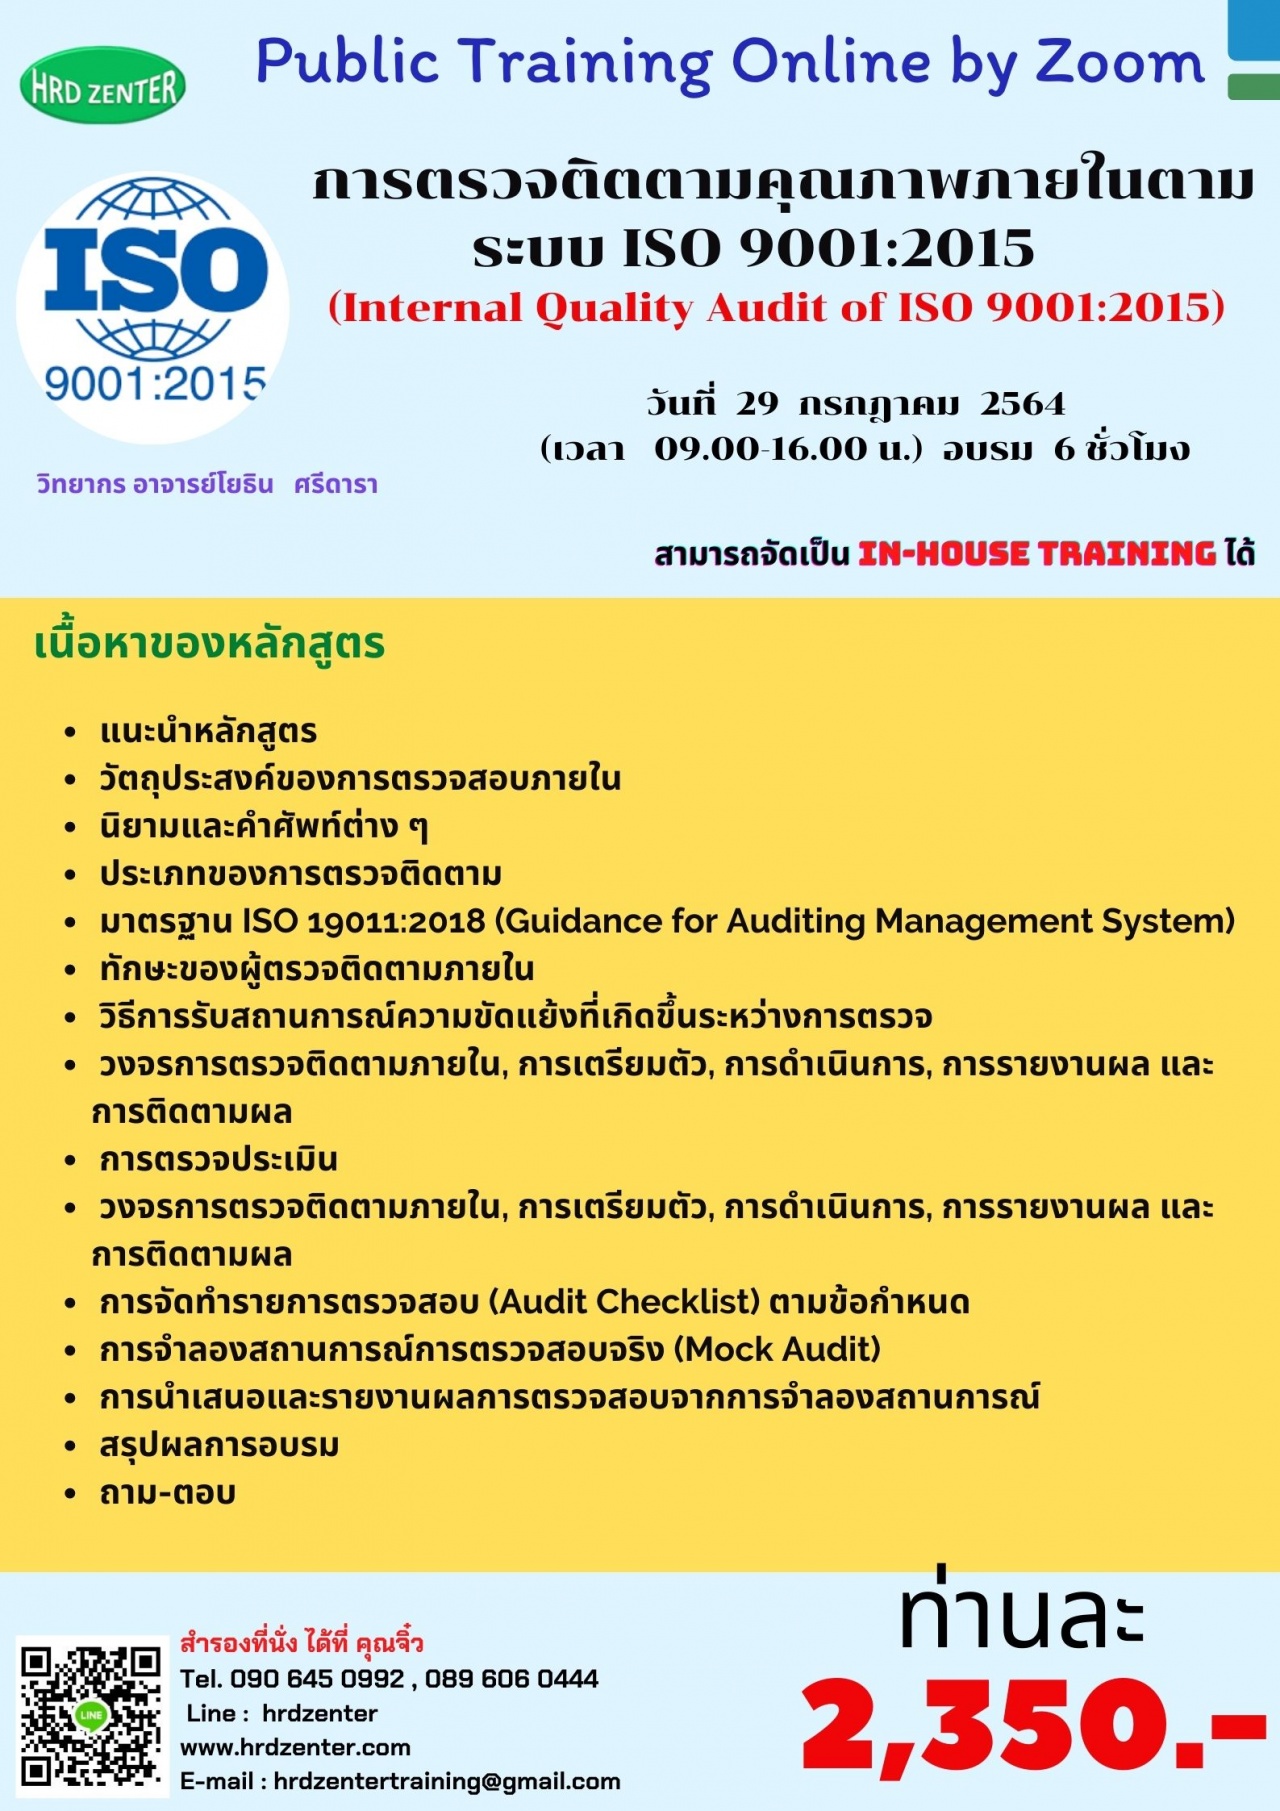 online by zoom : หลักสูตร  การตรวจติตตามคุณภาพภายในตามระบบ ISO 9001:2015     (Internal Quality Audit of ISO 9001:2015)